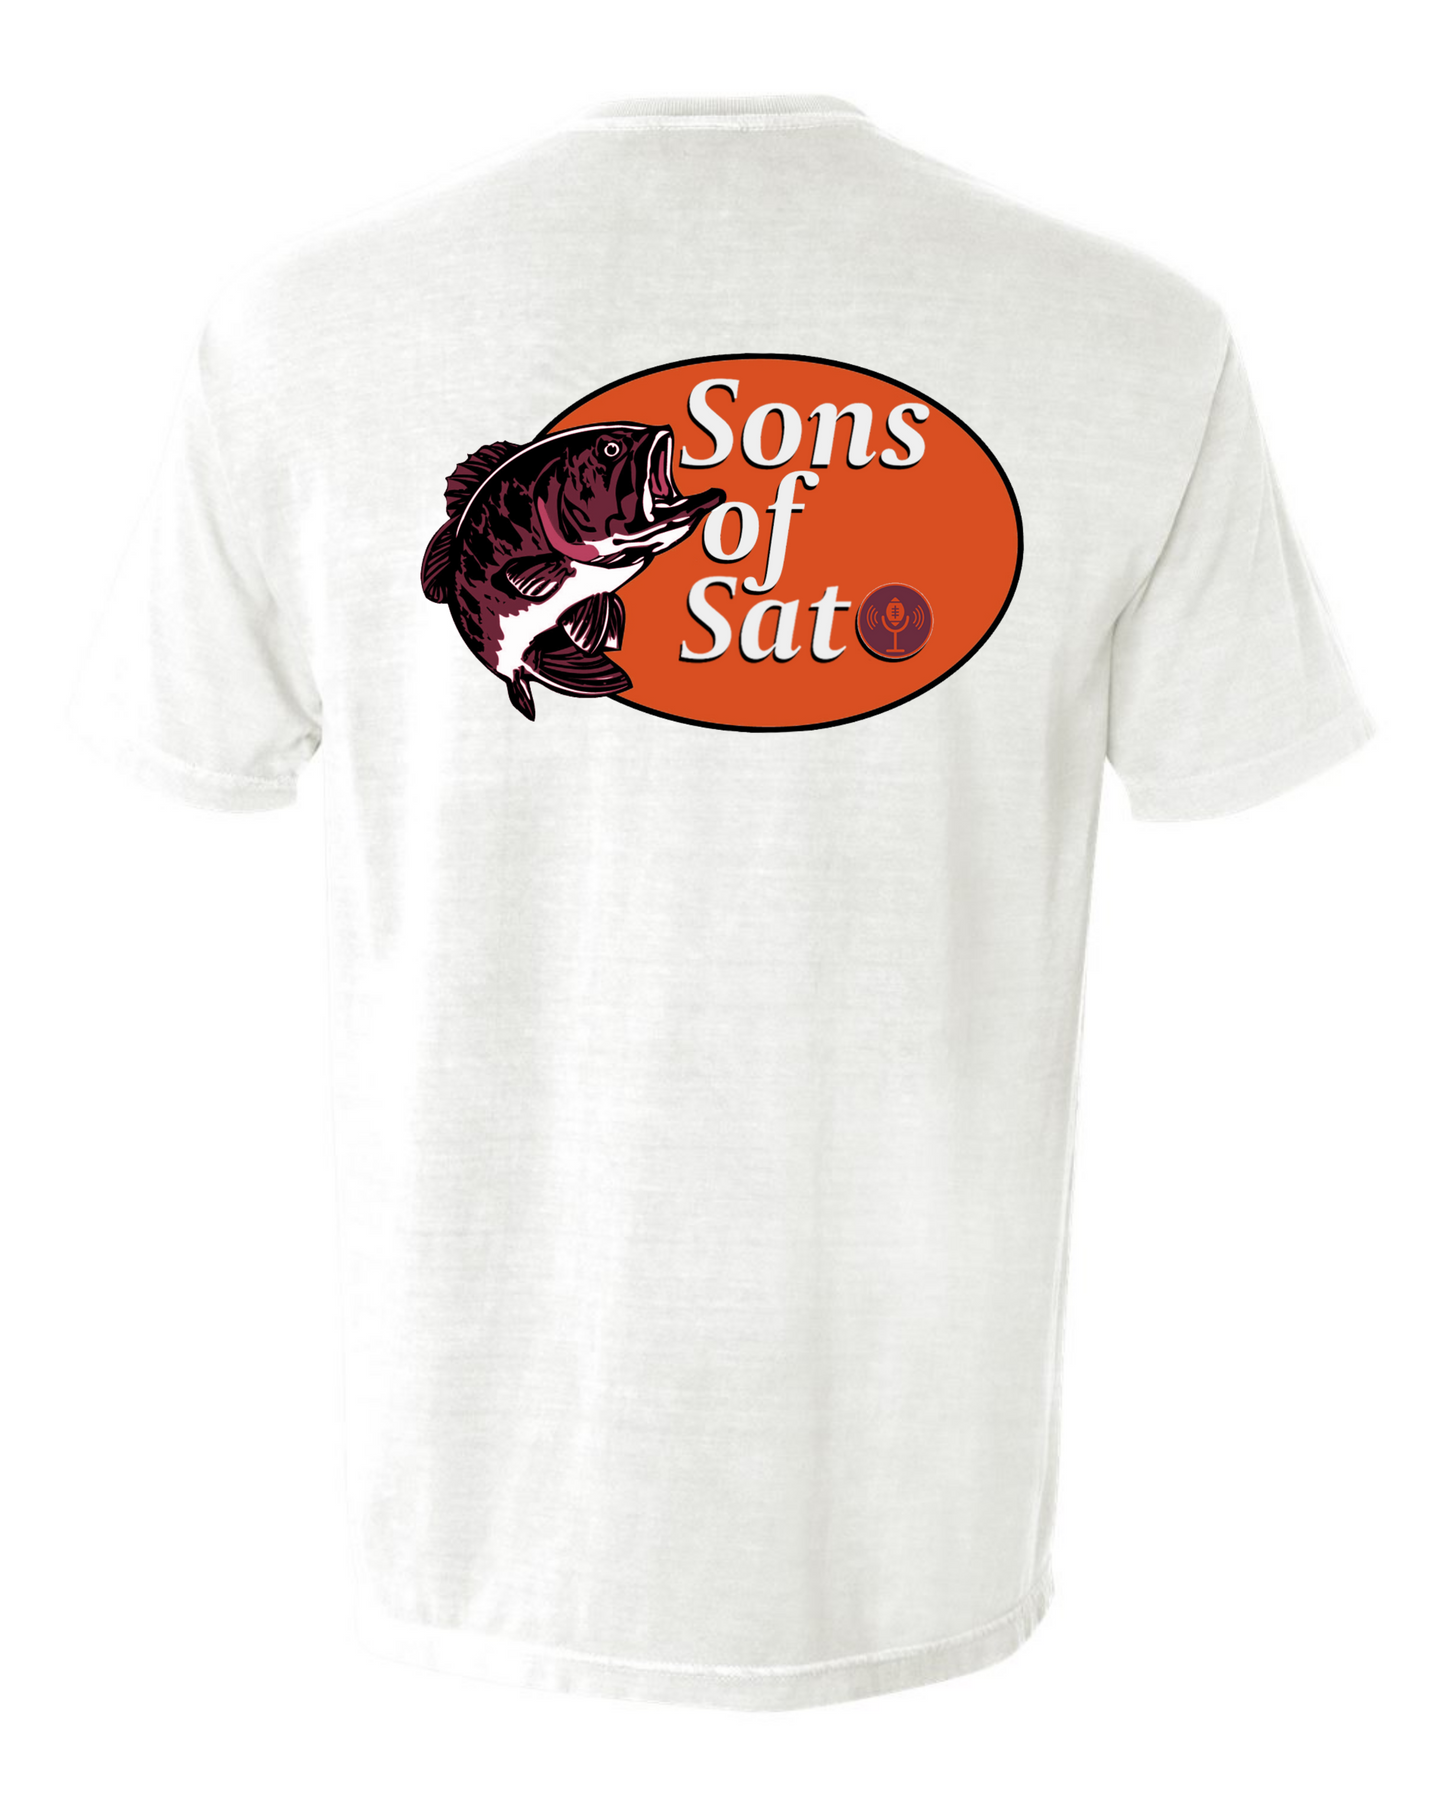 Sons of Saturday x Bass Pro Shirt